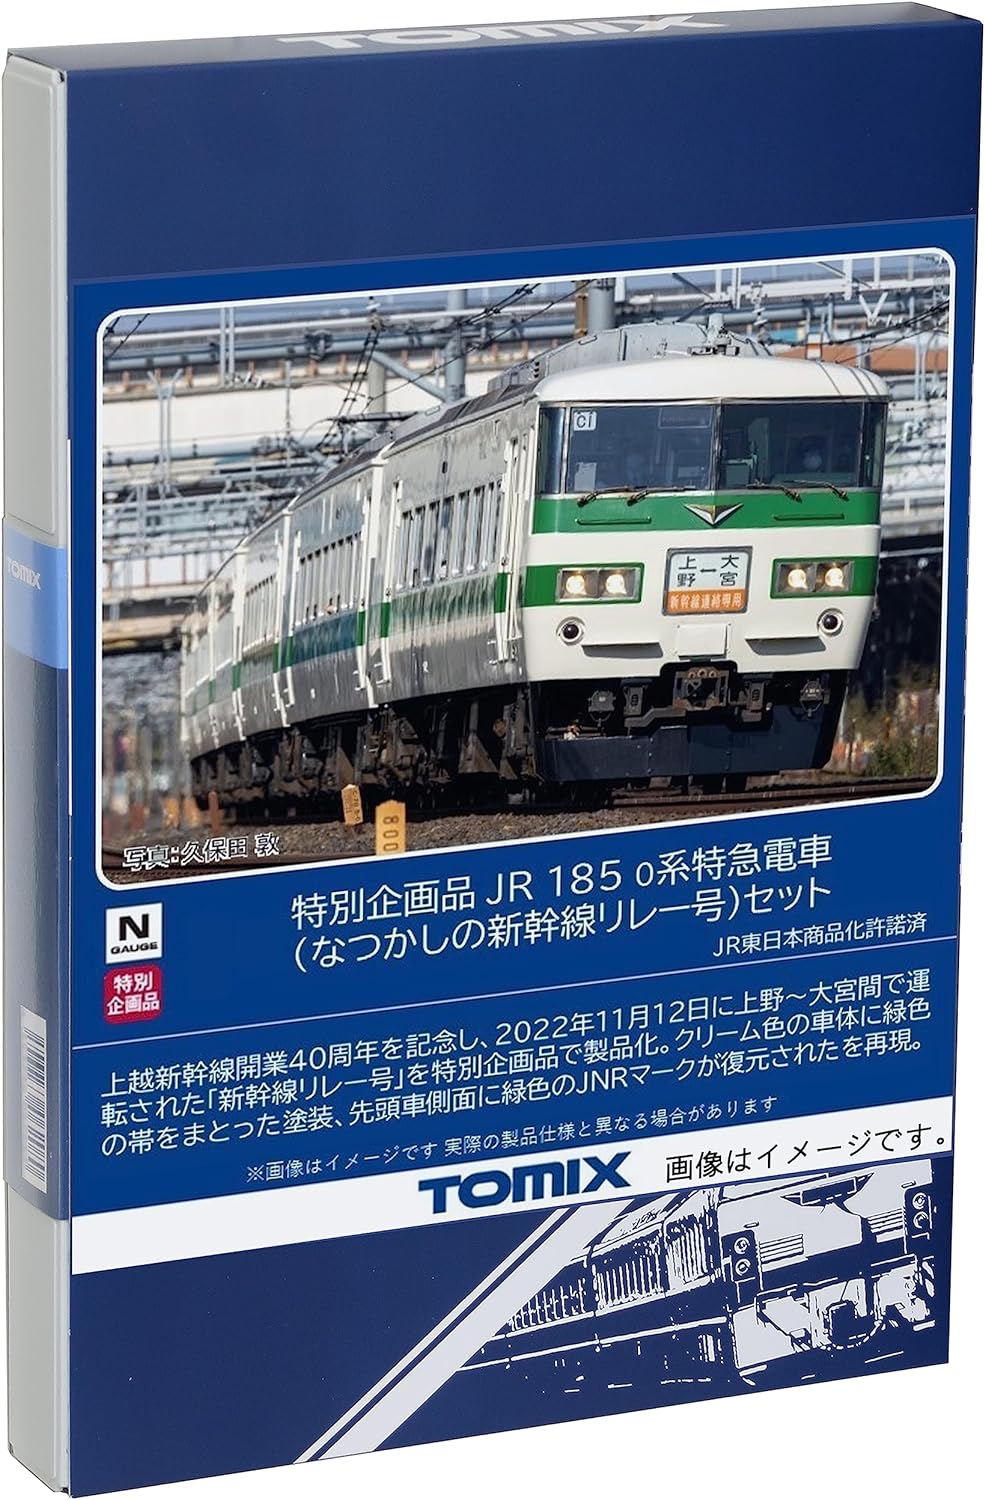 TOMIX 97958 N Gauge Special Planned JR 185 Series 0 Series Nostalgic Shinkansen Relay Set Model Train - BanzaiHobby